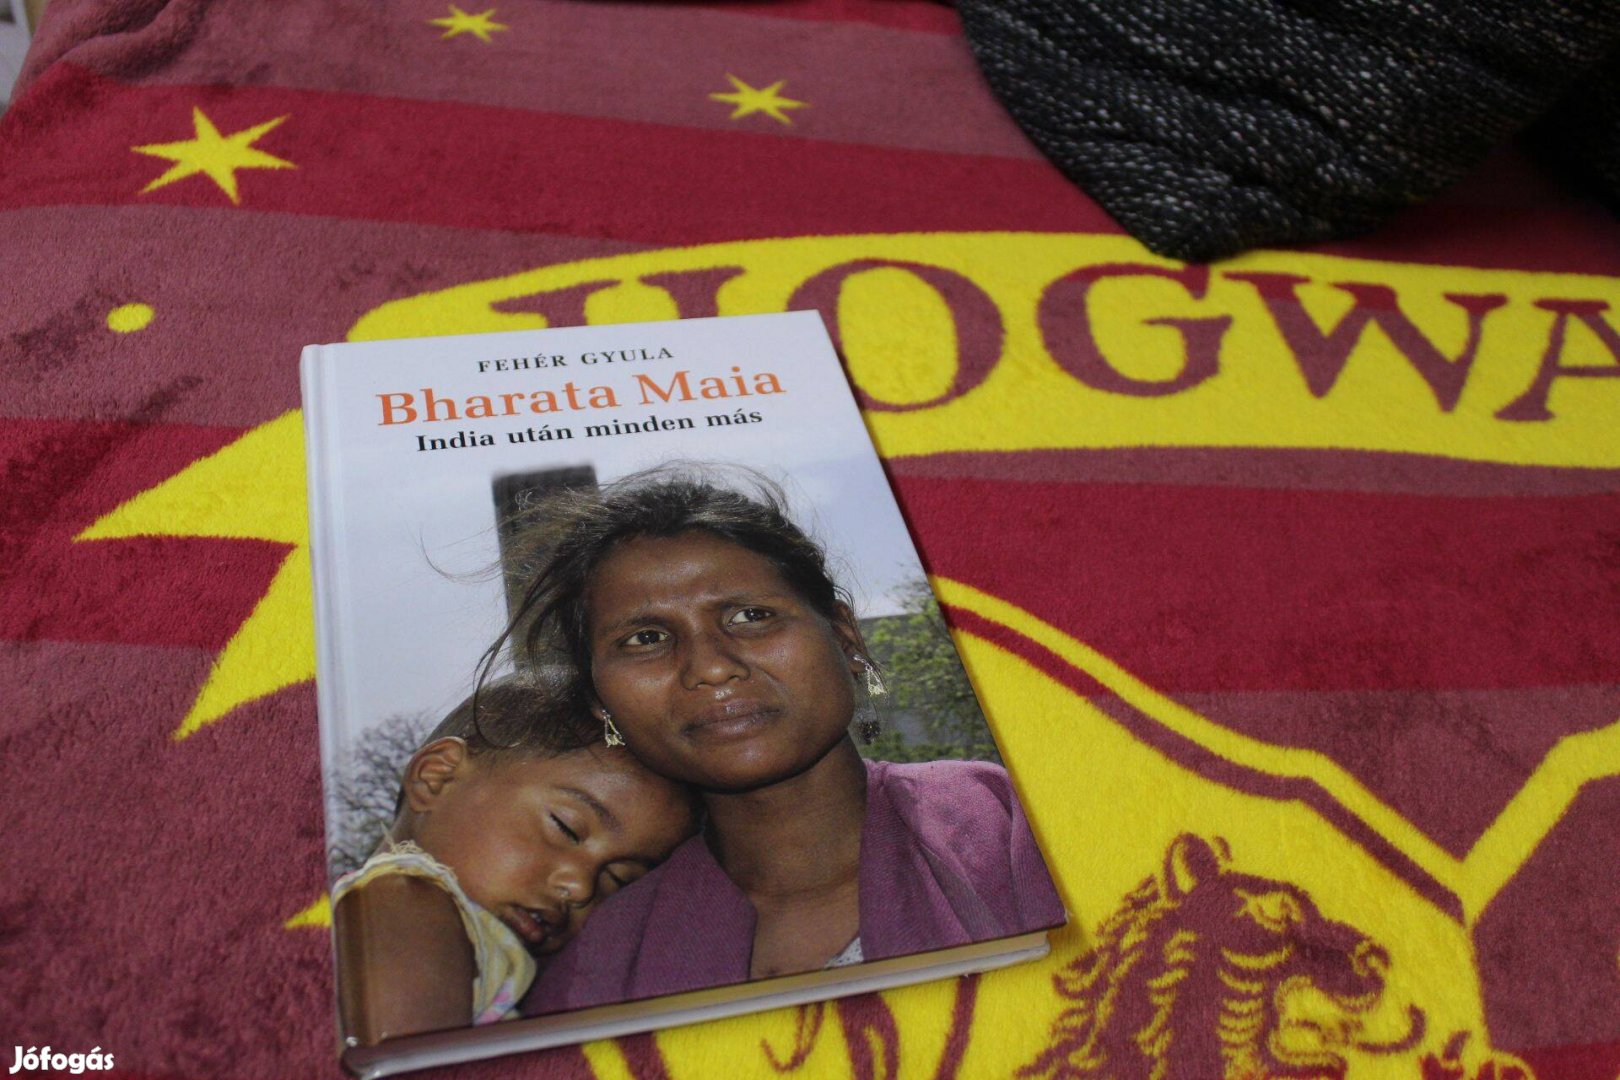 Feher Gyula, Bharata Maia, India utan minden mas